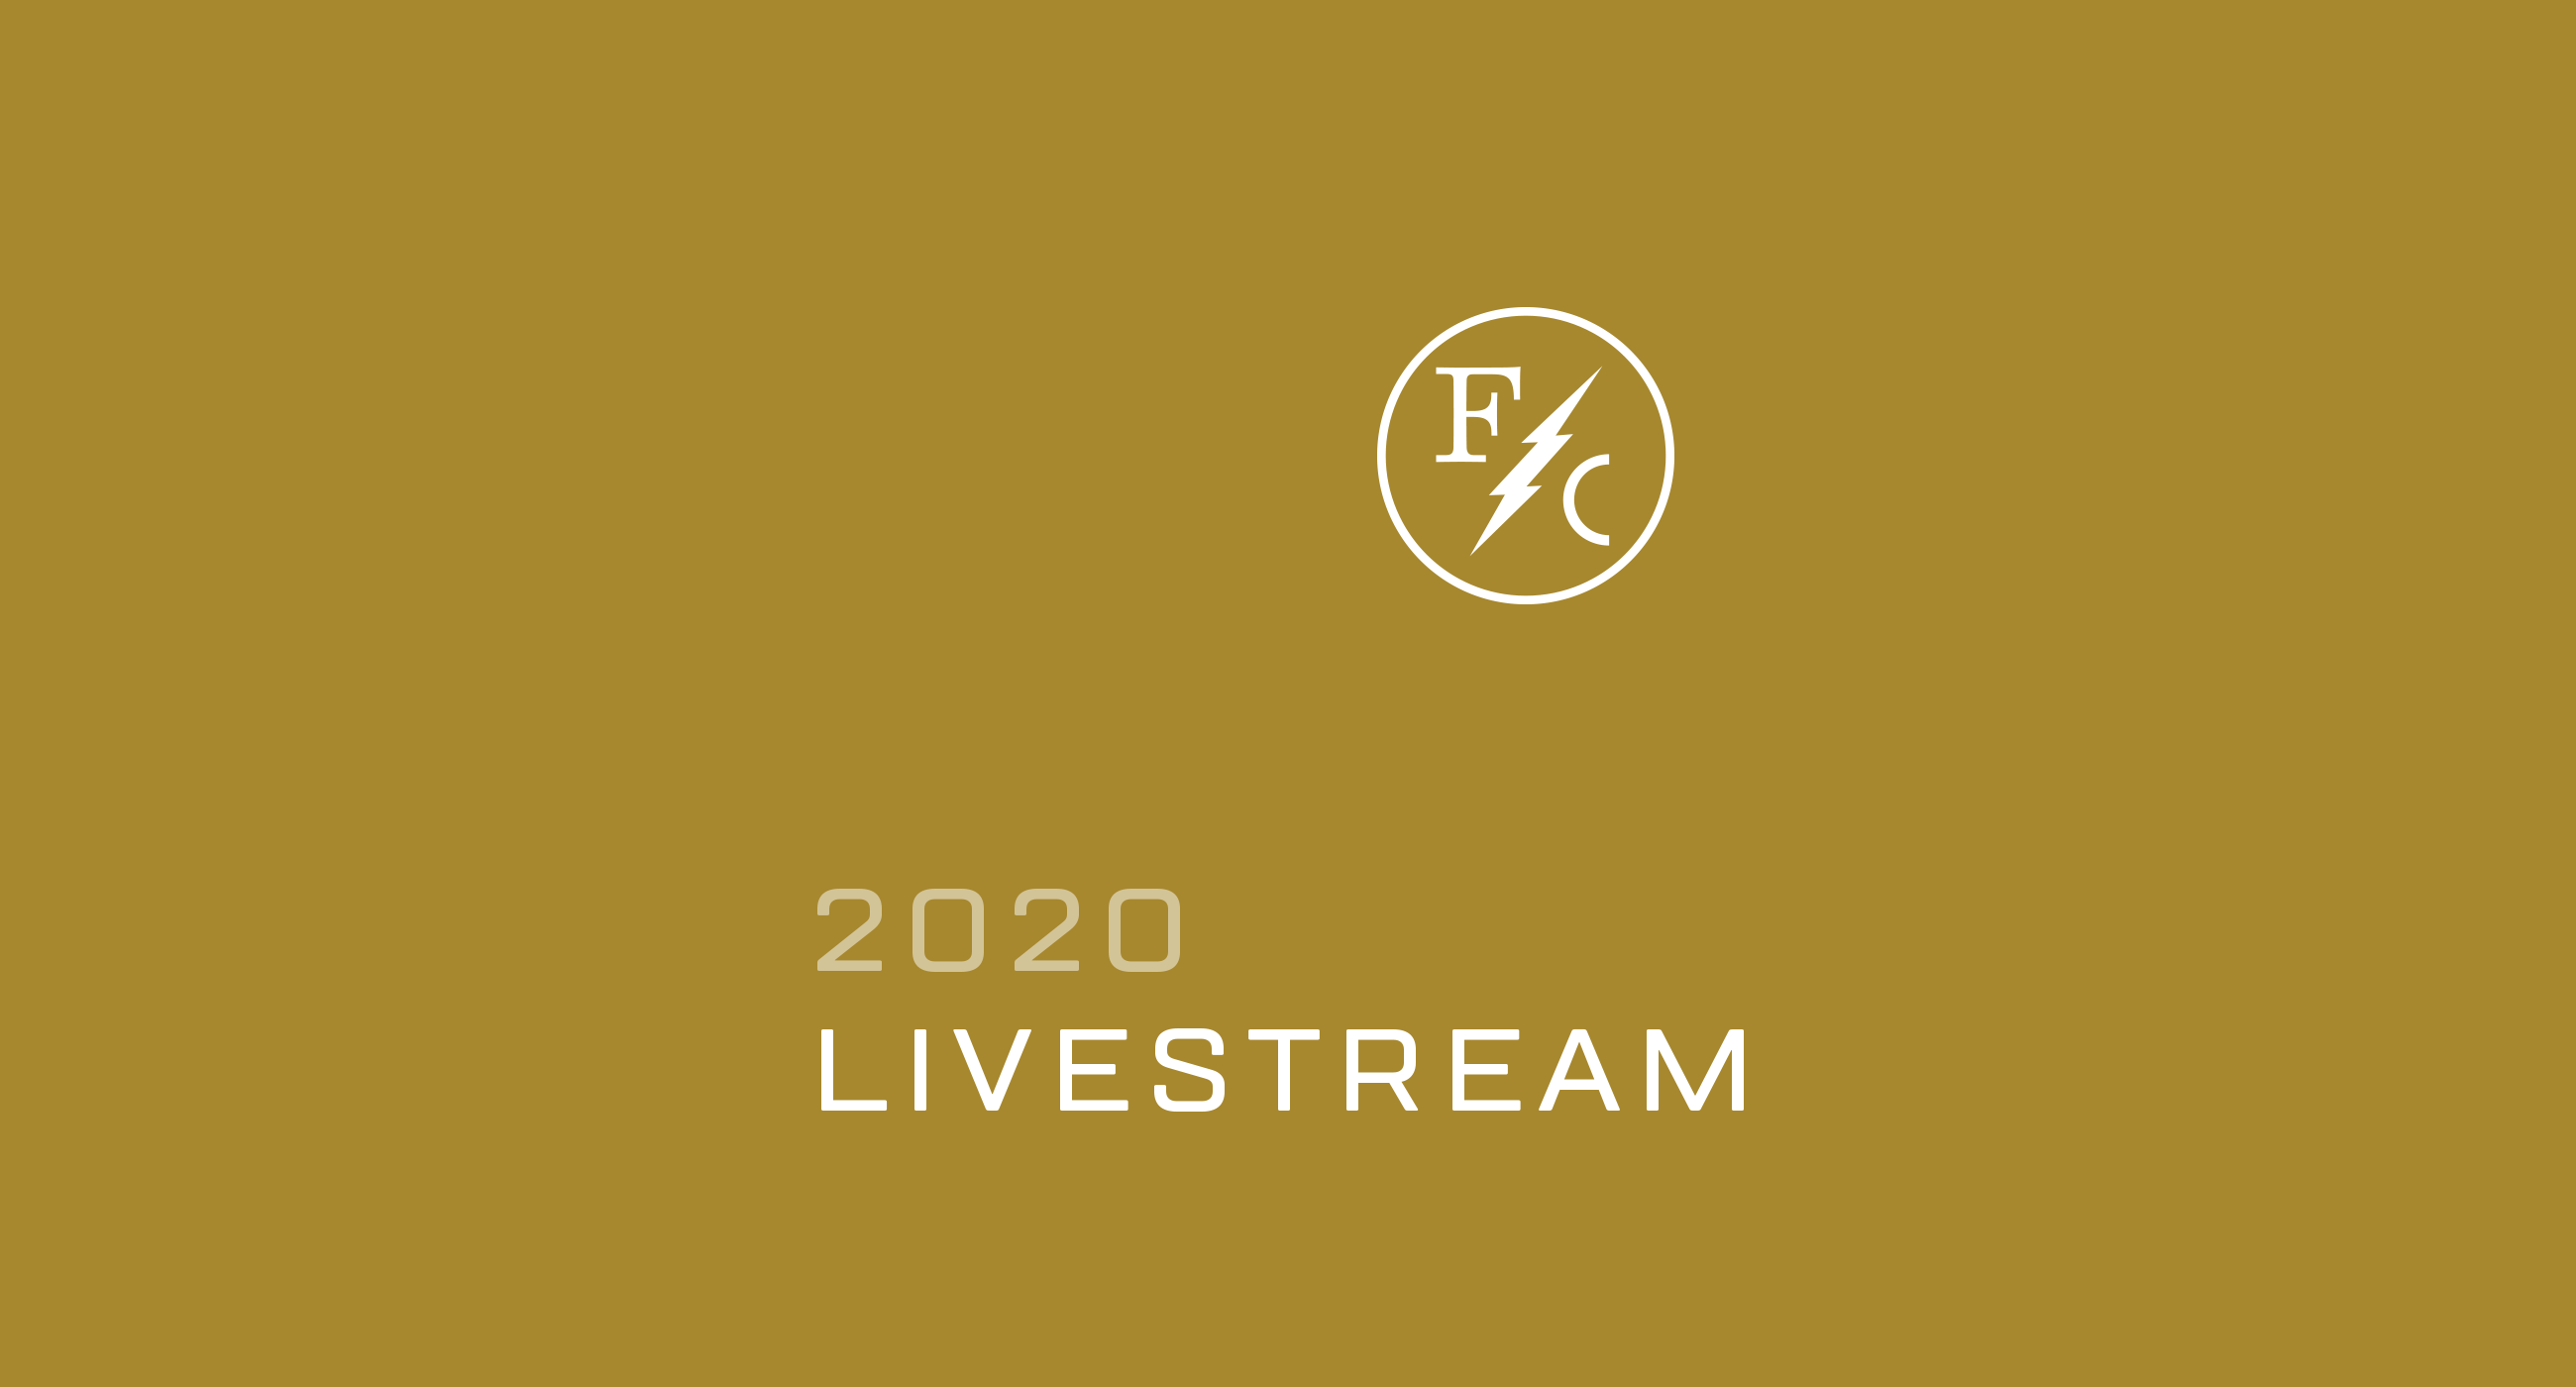 FC_2020-Livestream.png